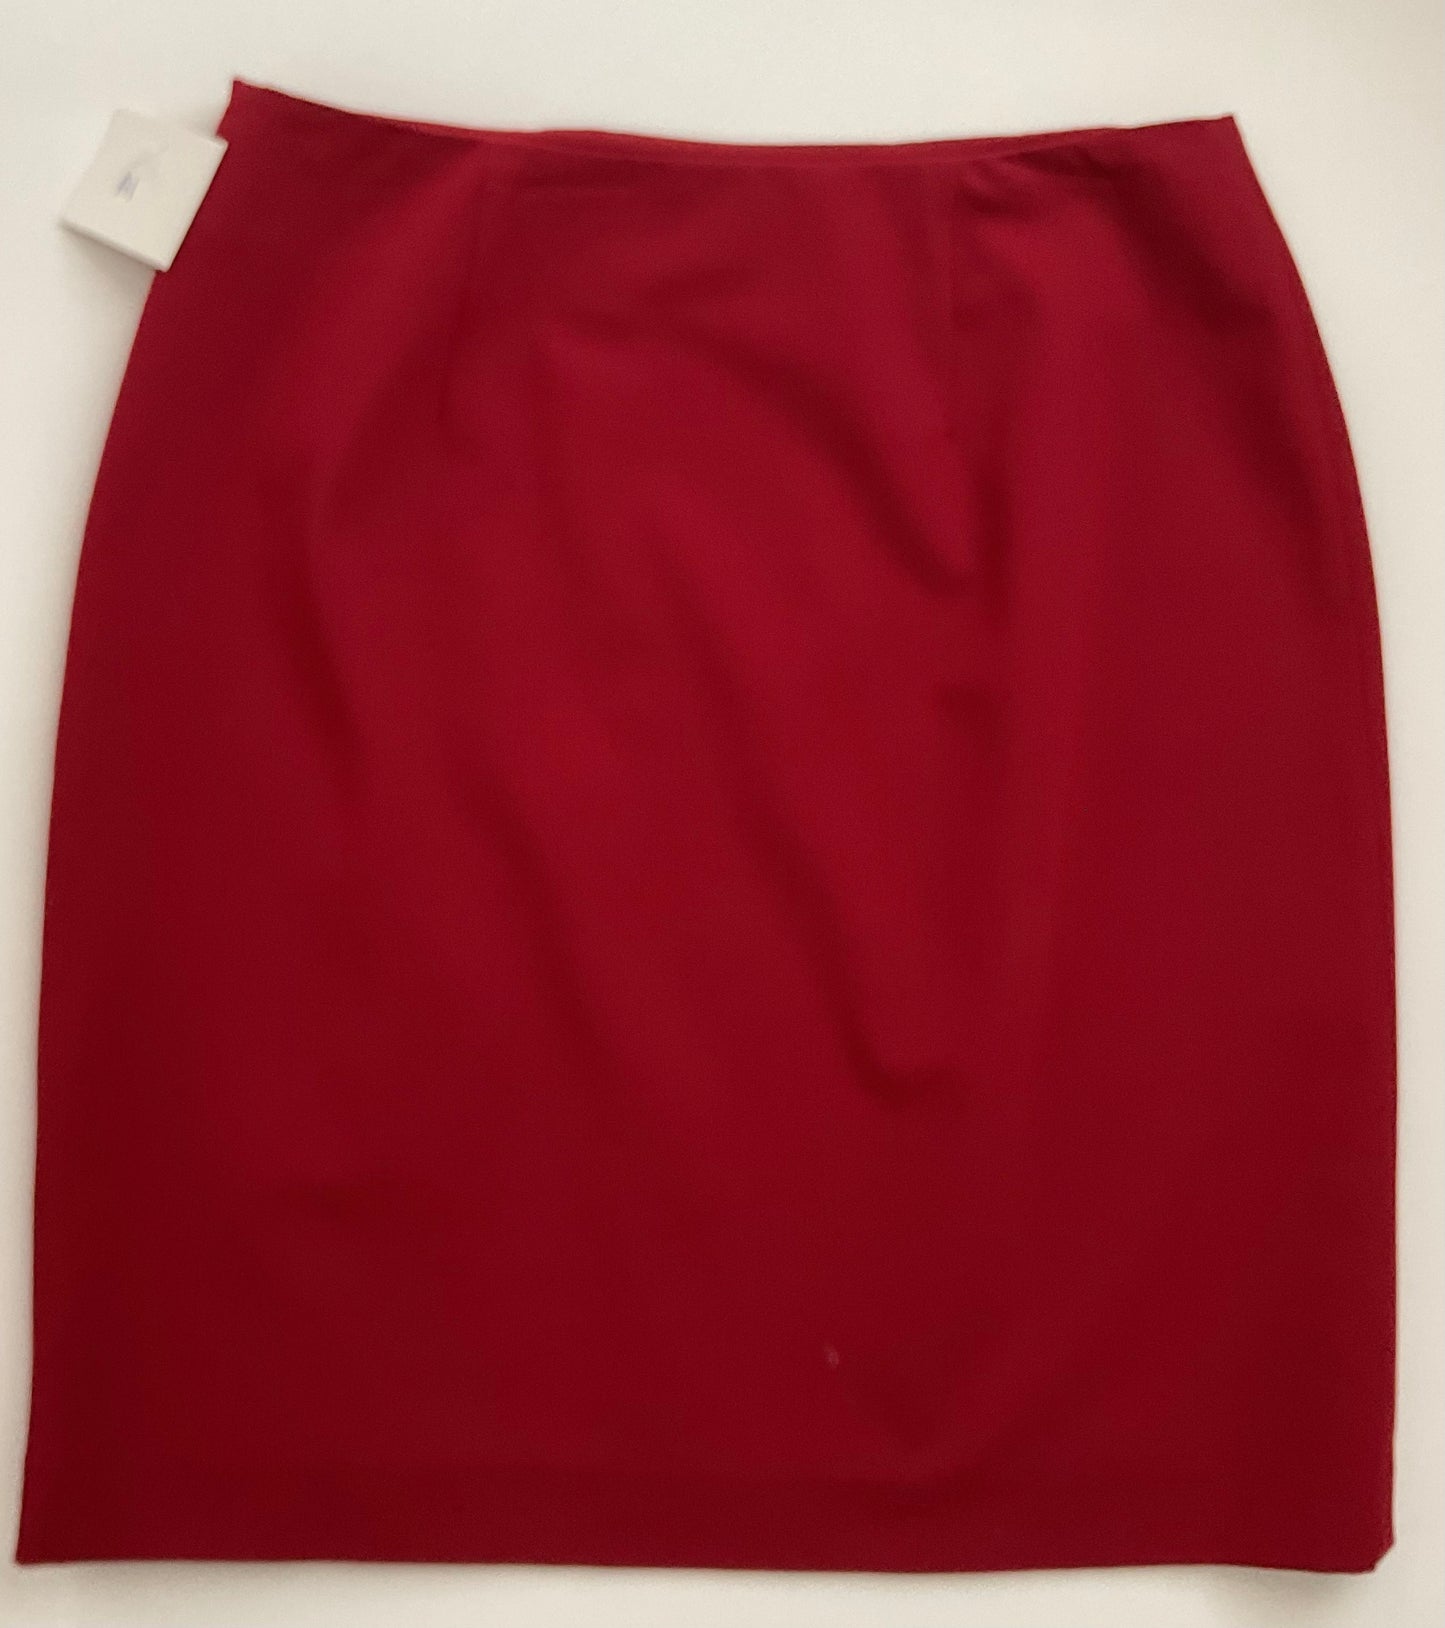 Petite Sophisticated Women’s Basic Pencil Skirt Size 4